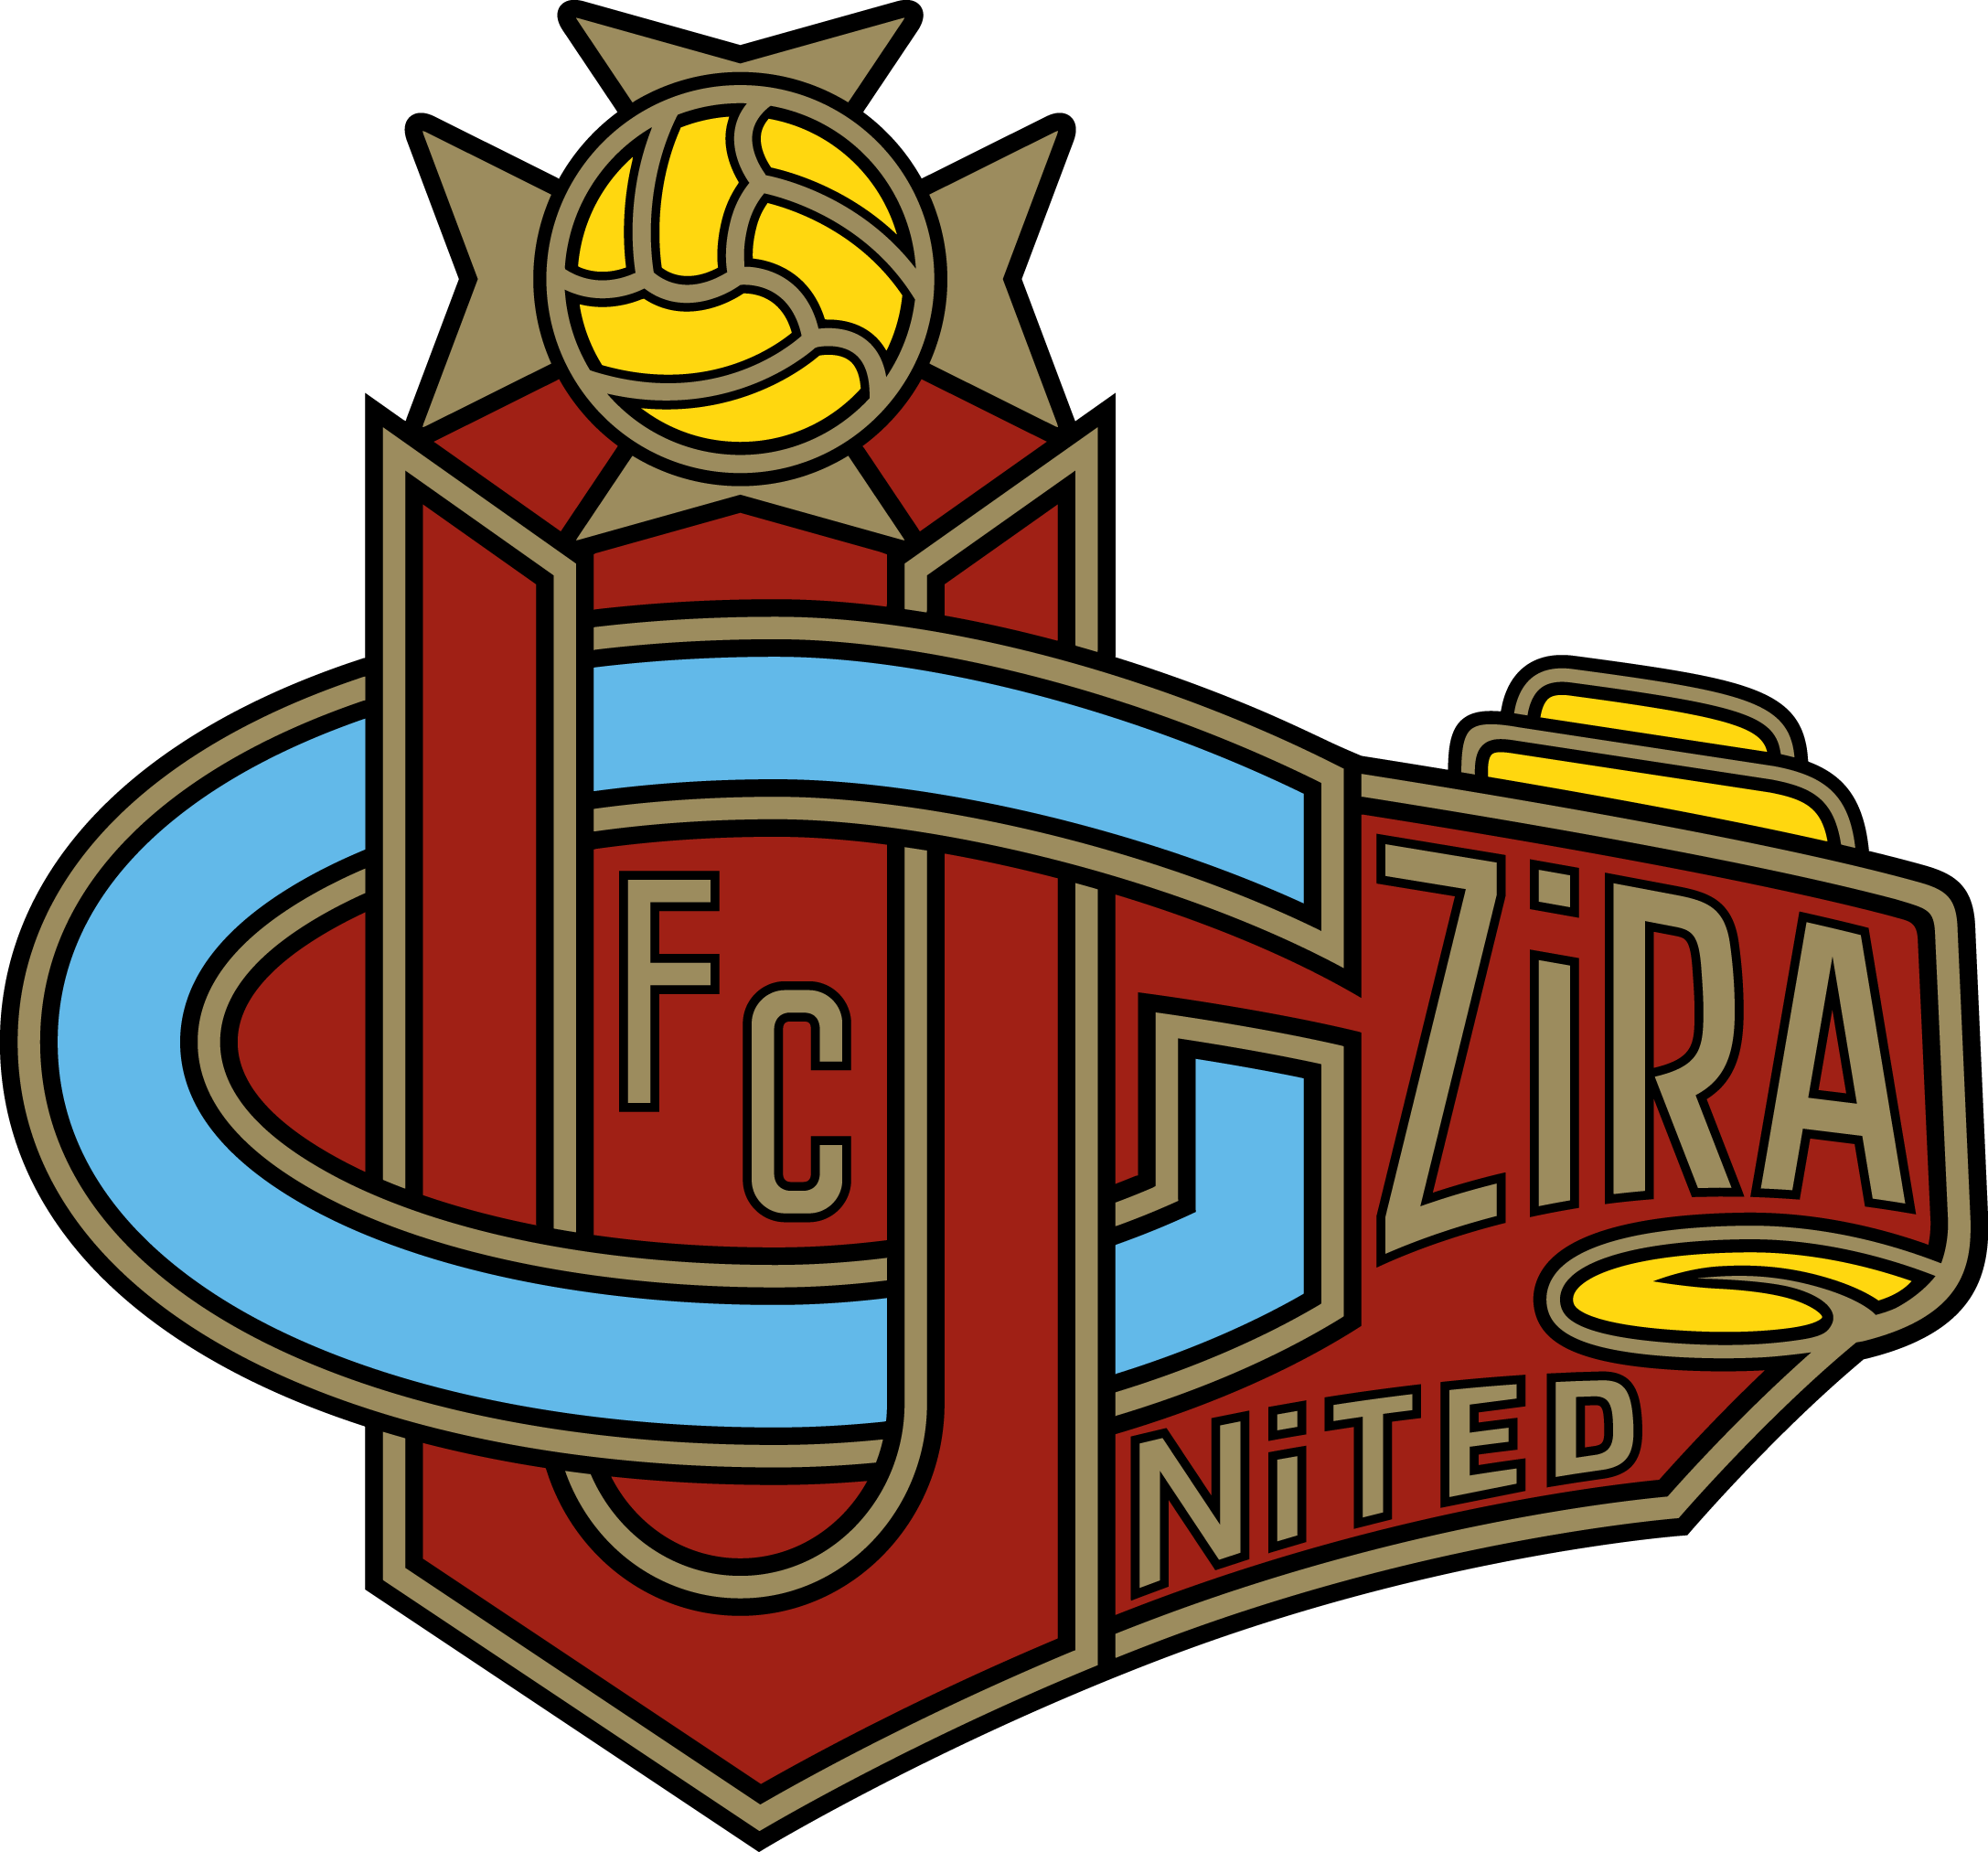 Fc Gzira United - Gżira United F.c. (2174x2025)